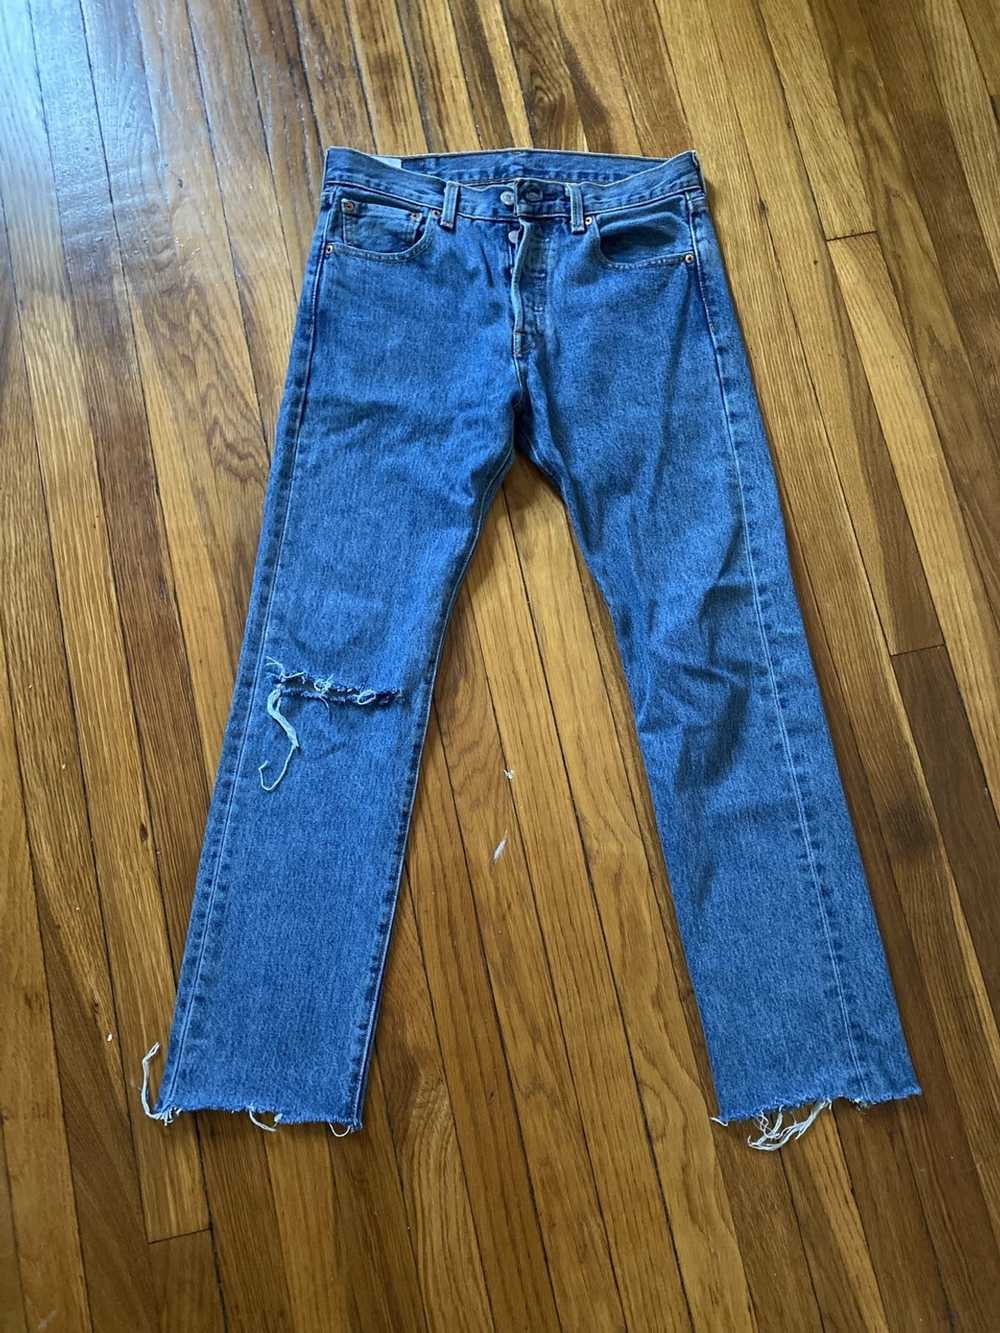 Levi's Vintage Clothing Levi’s vintage jeans - Gem